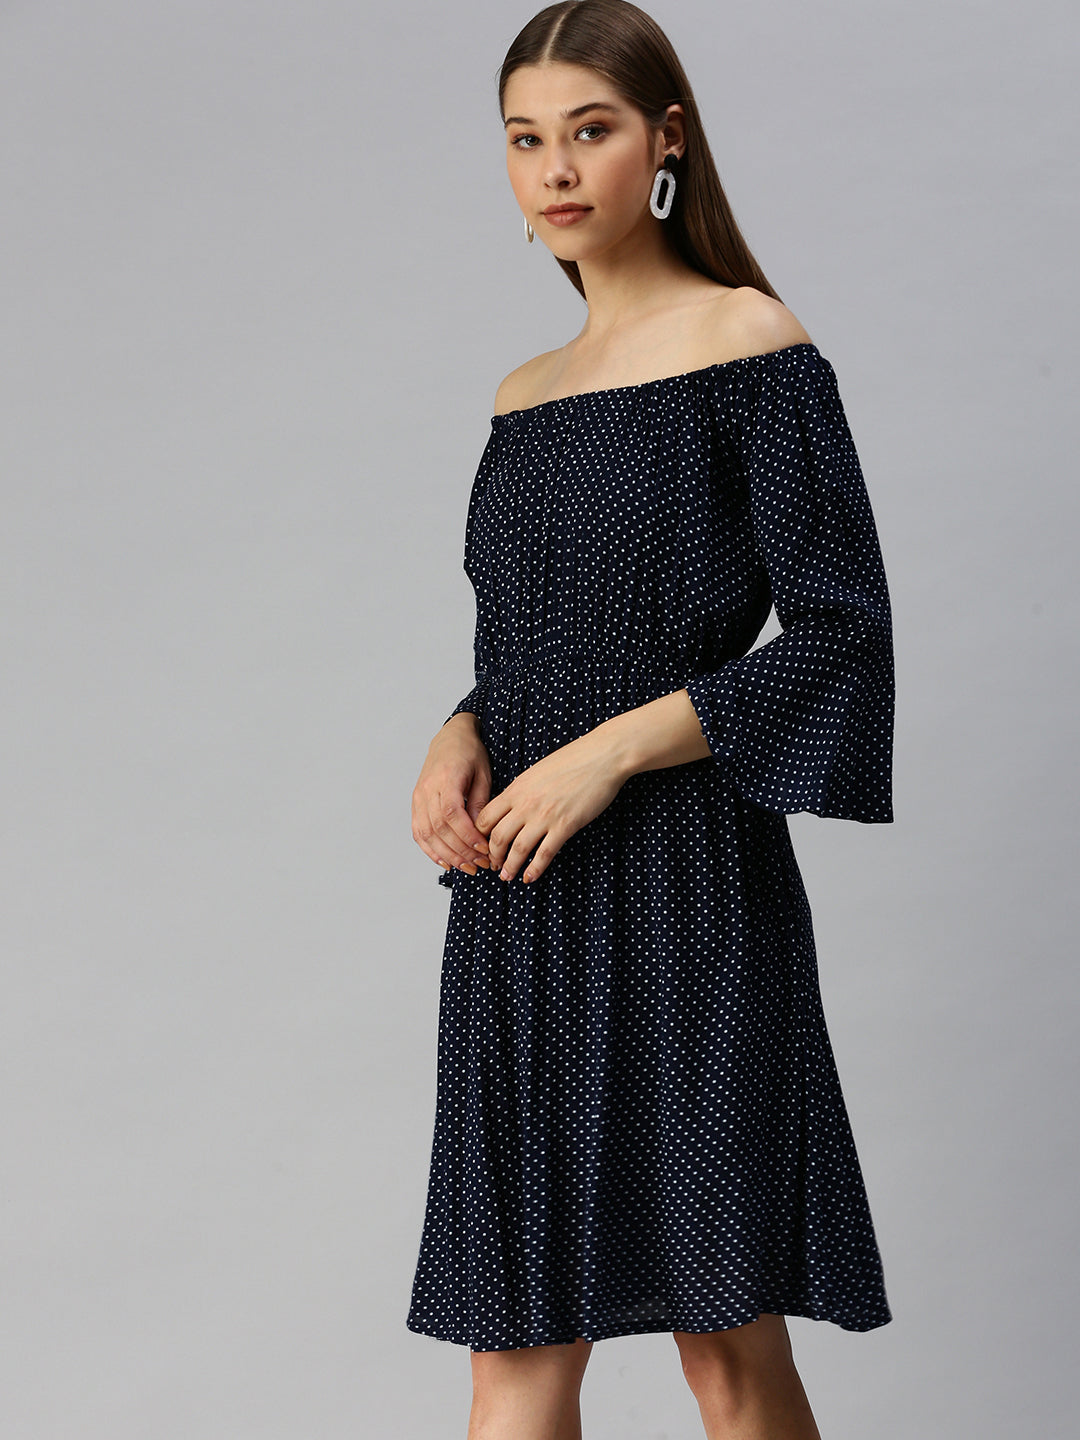 Women's Blue Printed Empire Dress